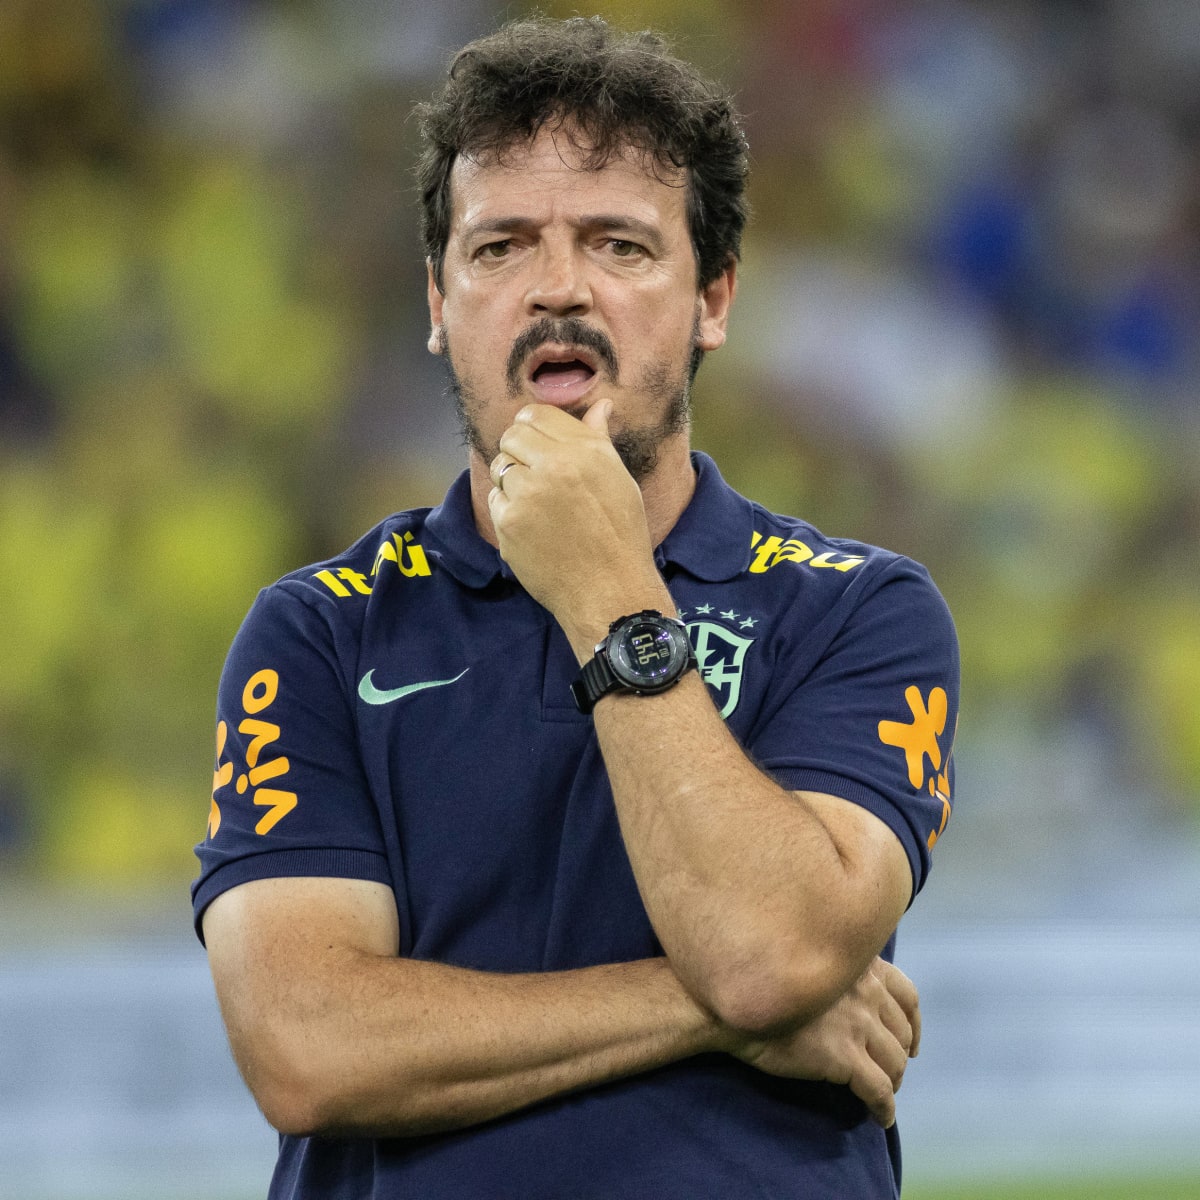 Brazil sack coach Fernando Diniz after World Cup struggles: Source